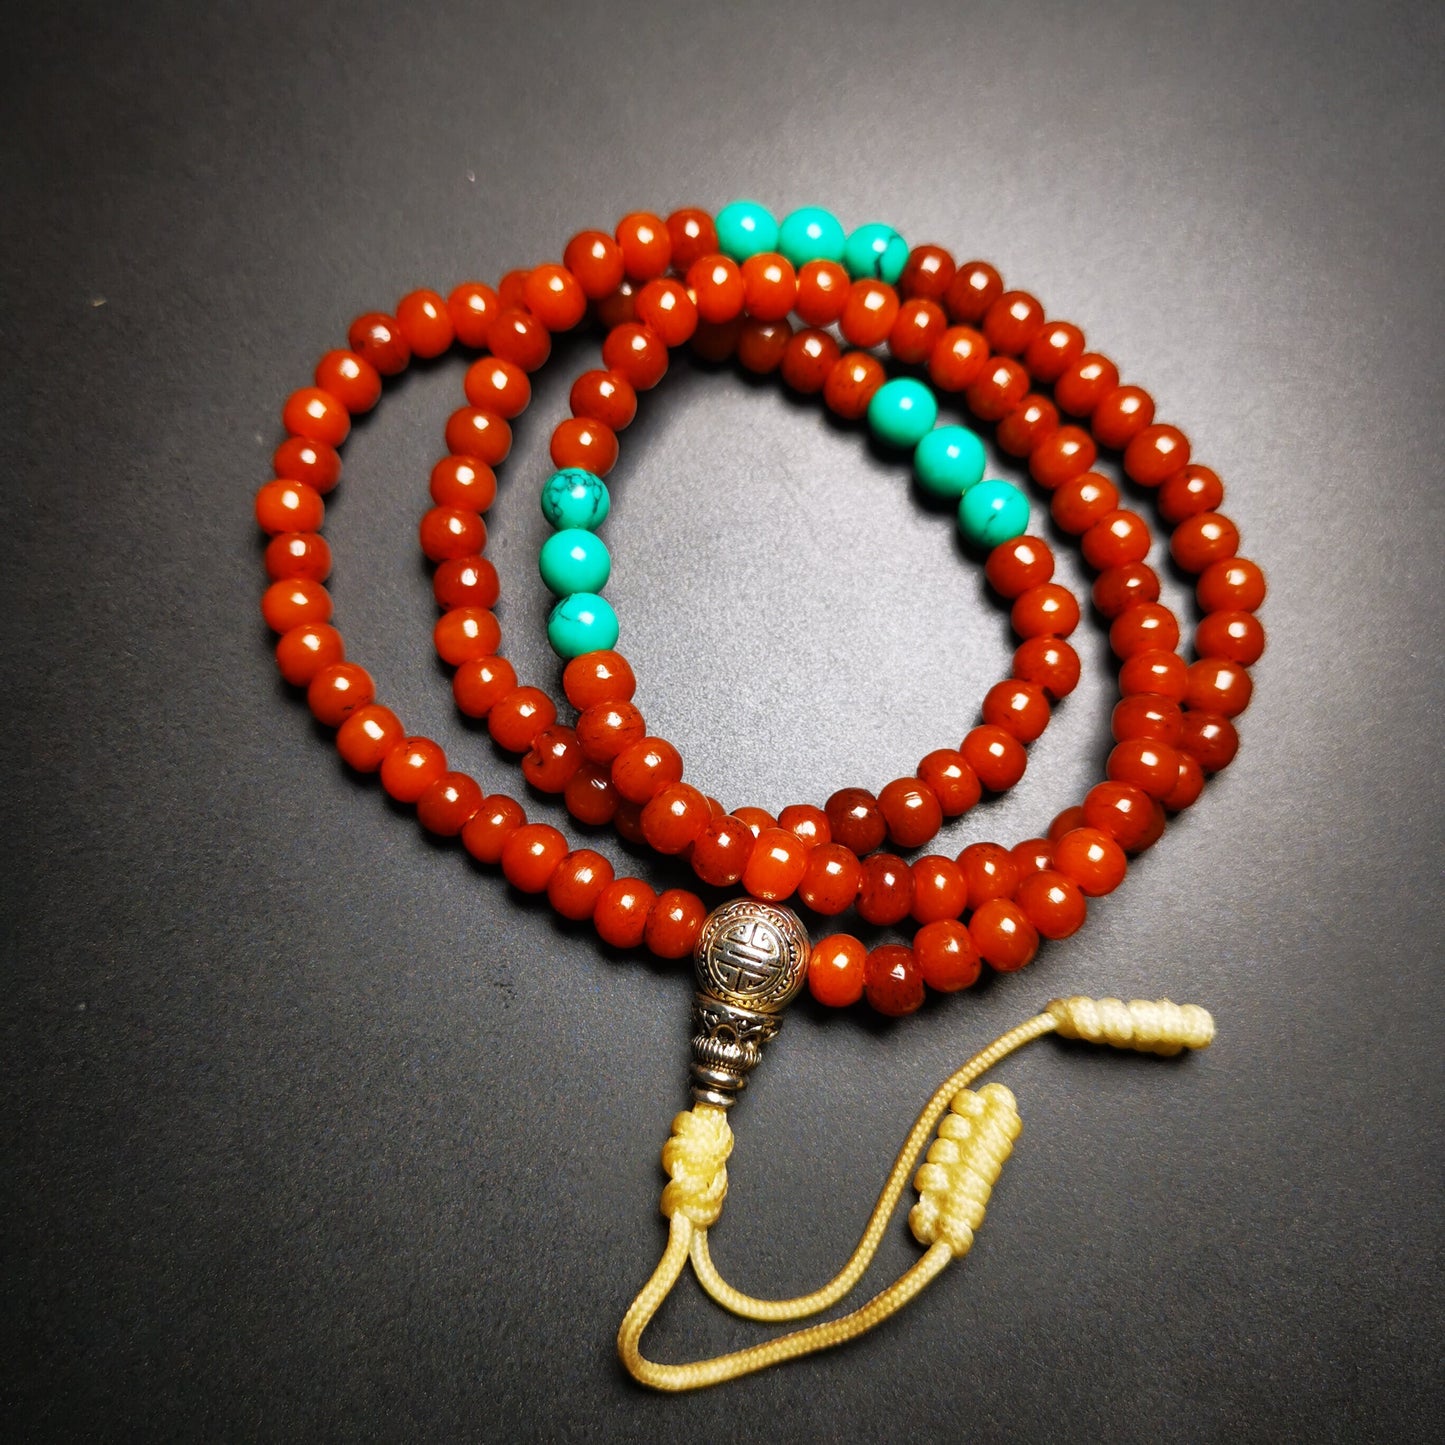 Gandhara Hand-carved Tibetan Yak Bone Mala Beads Necklace,Small prayer Beads for Meditation and Prayer